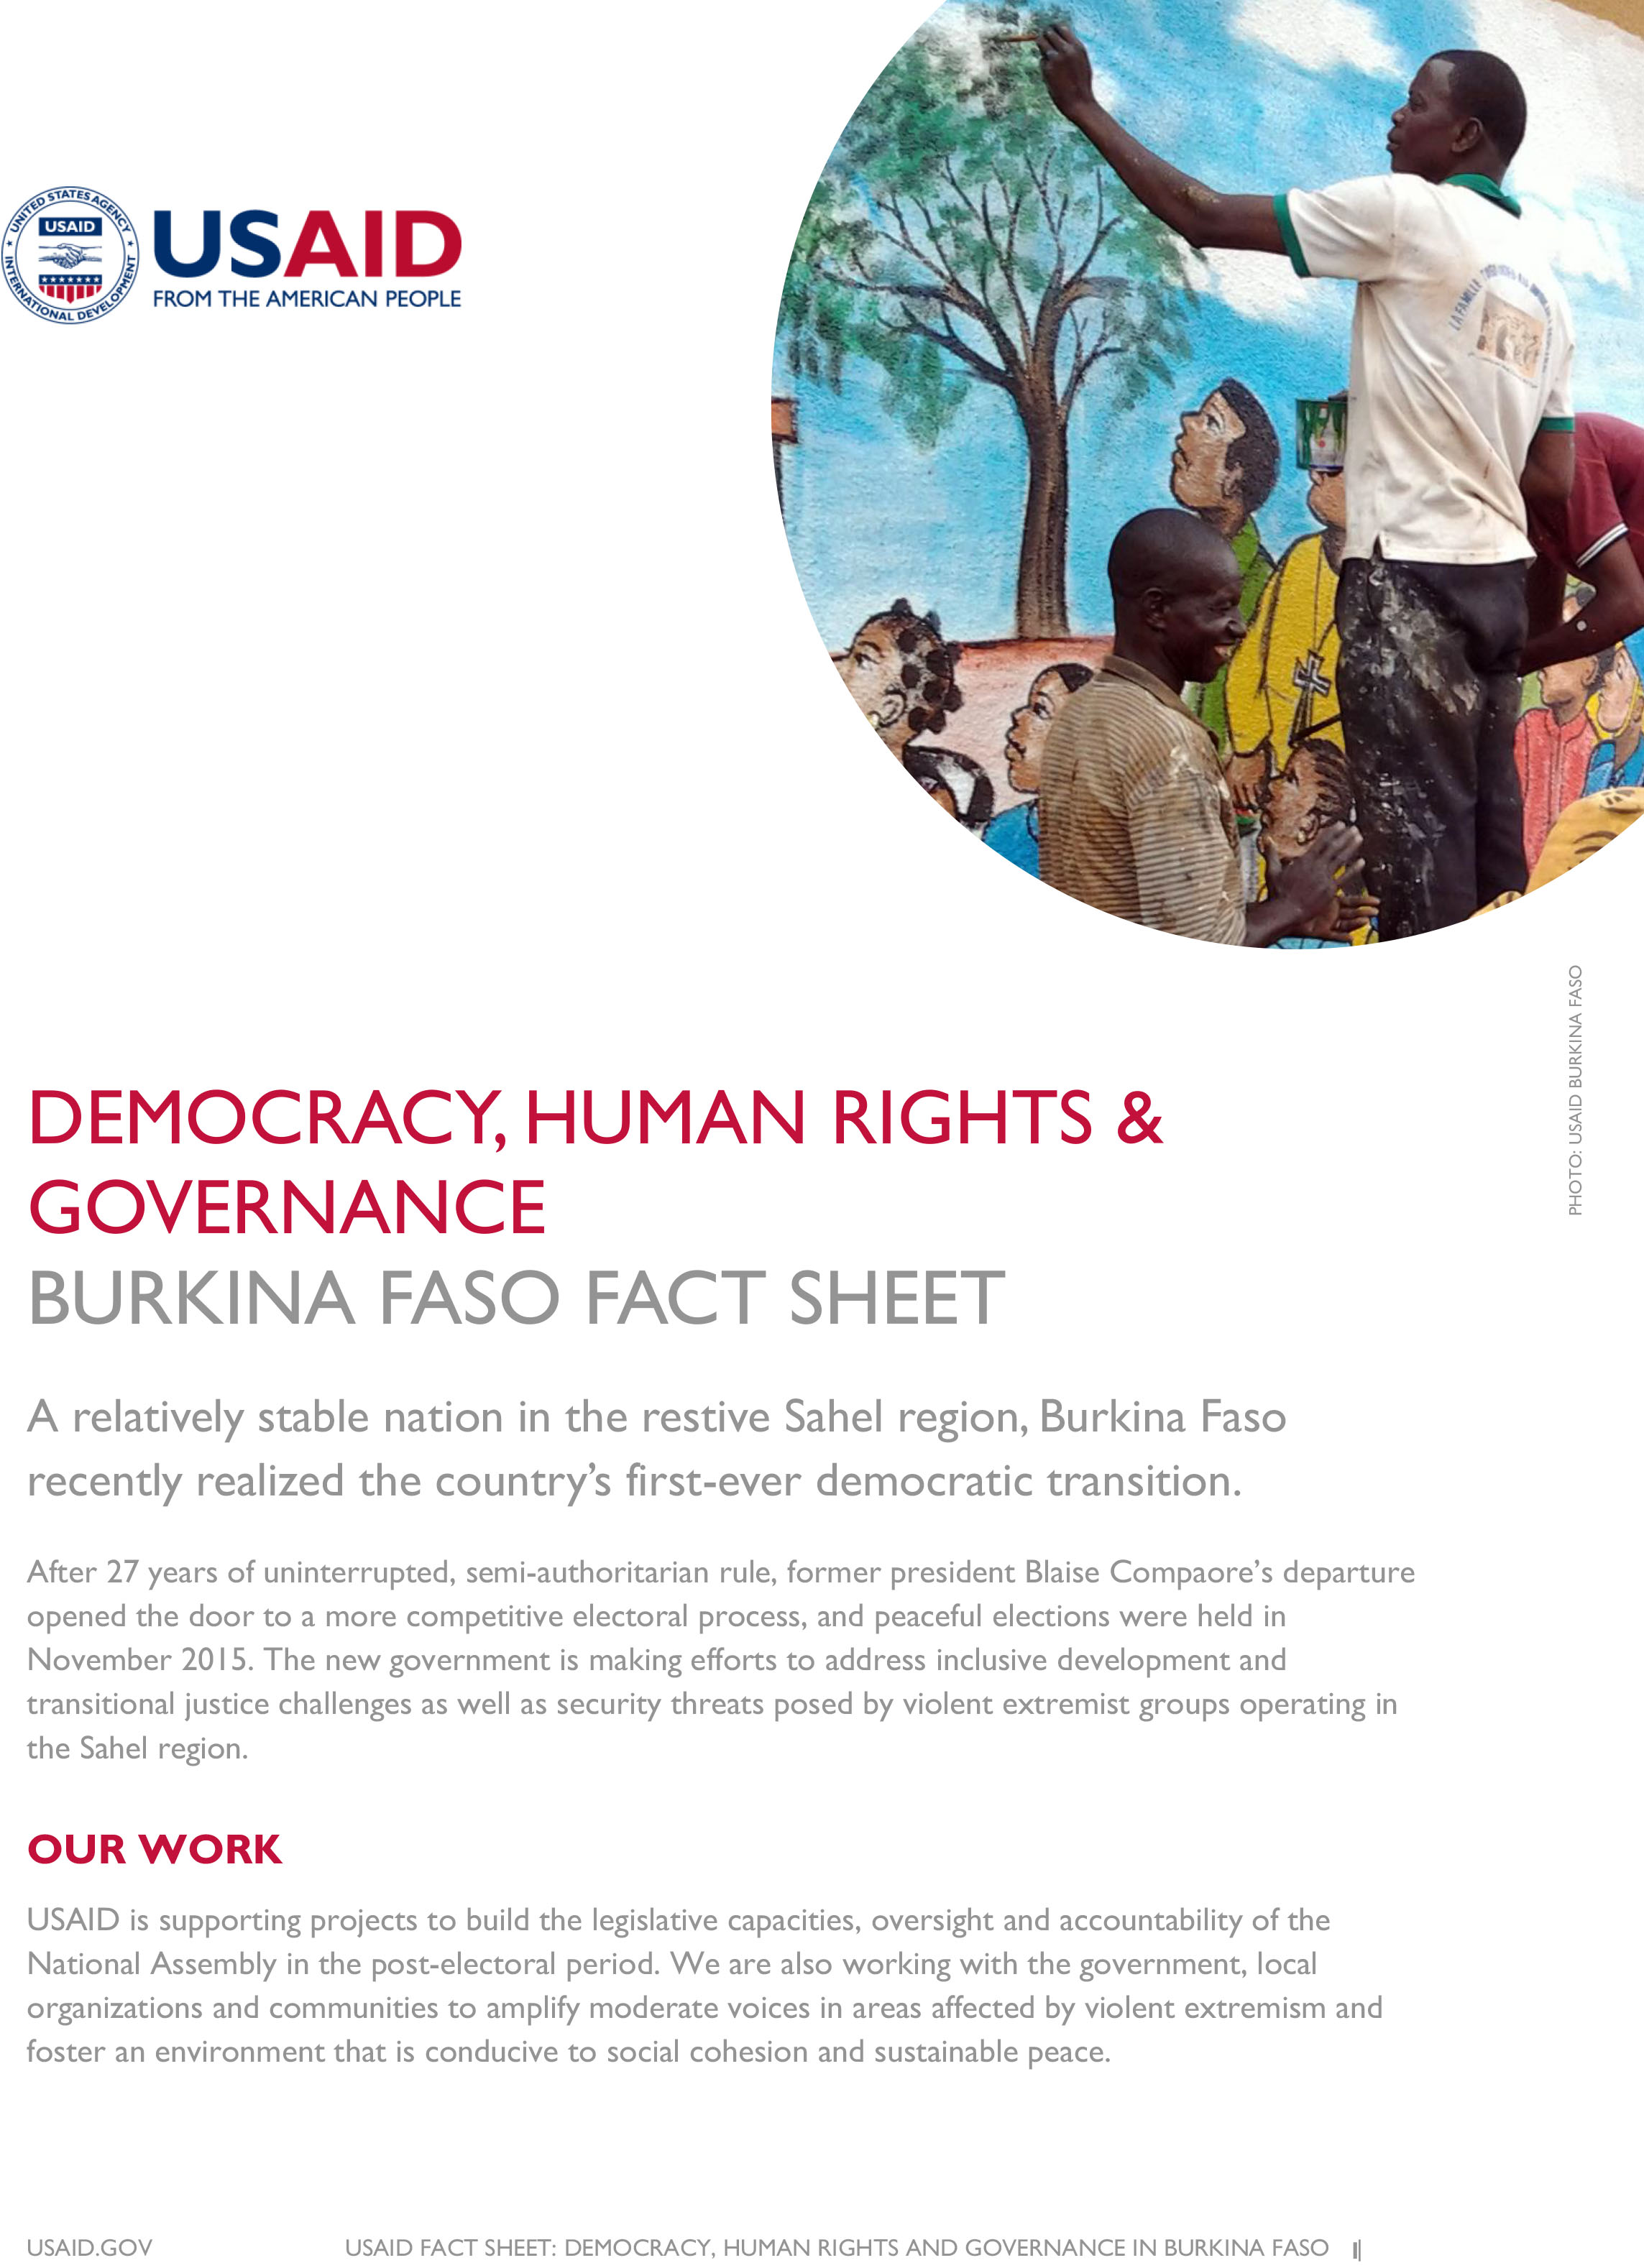 Burkina Faso Fact Sheet-Democracy, Human Rights & Governance